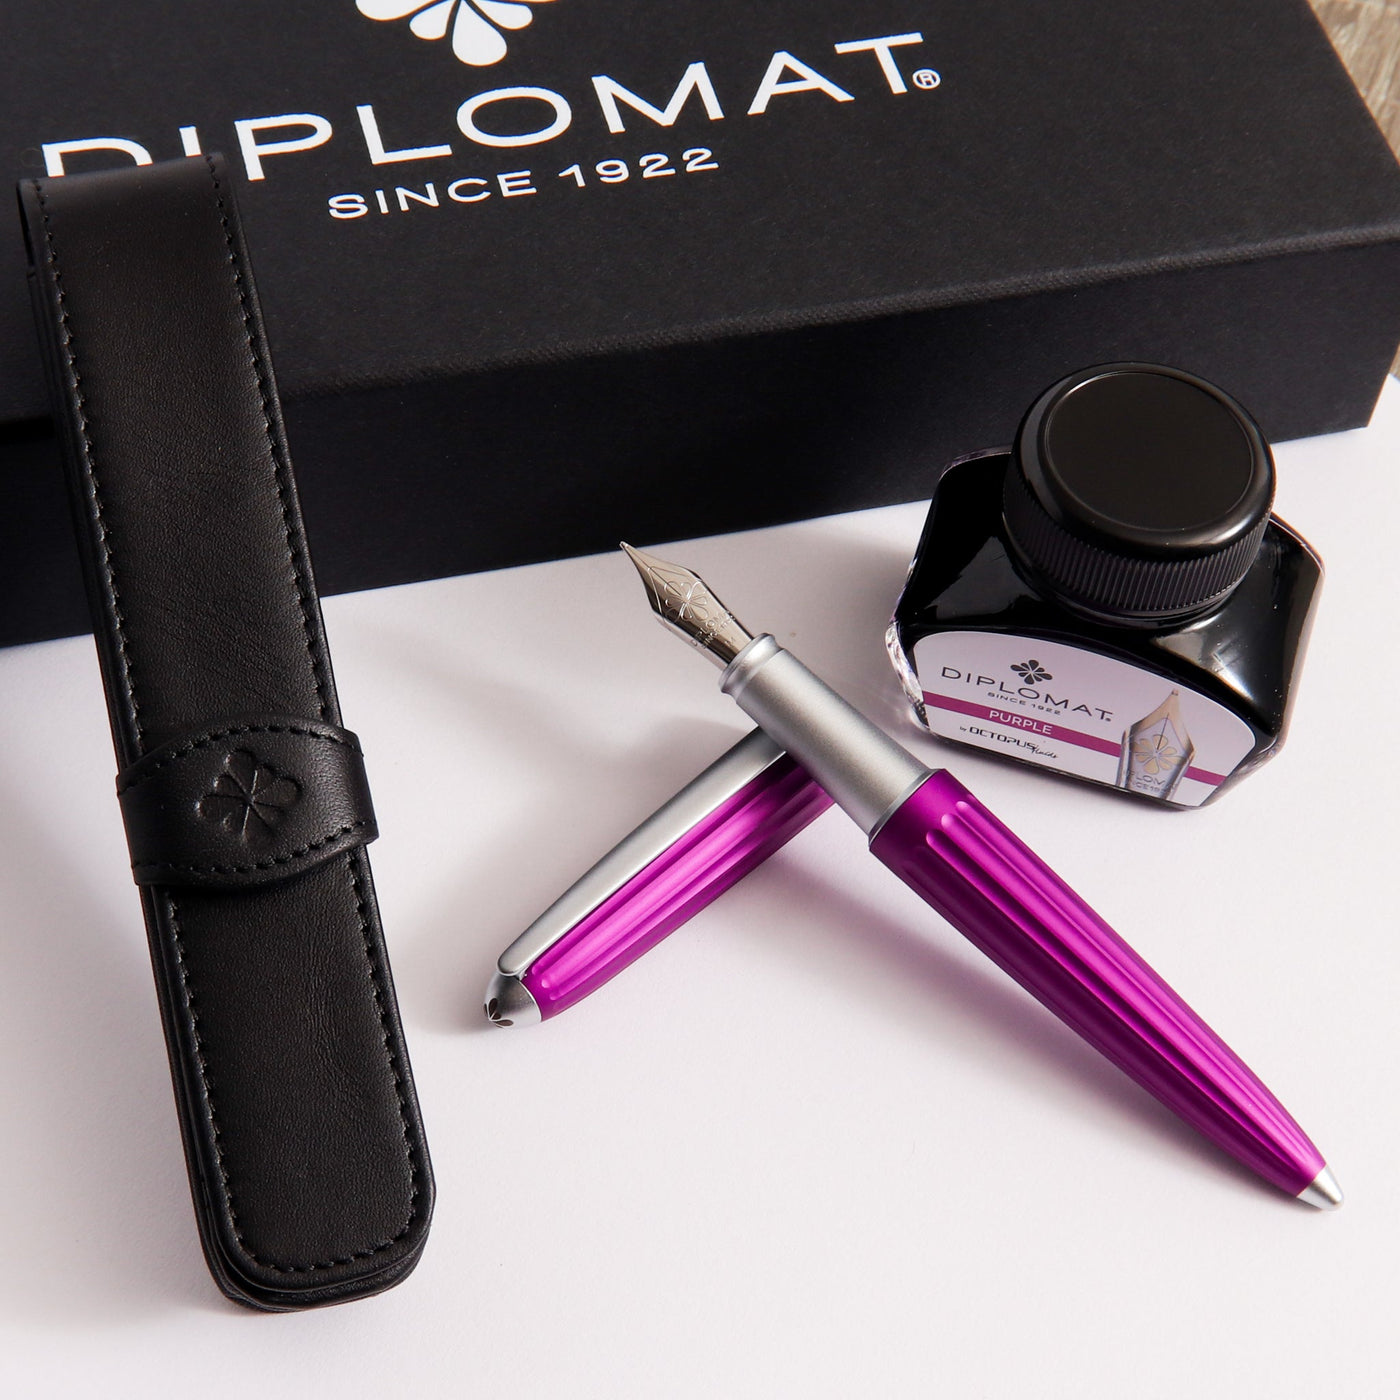 Diplomat-Aero-Violet-Fountain-Pen-Gift-Set-Case-Pen-And-Ink